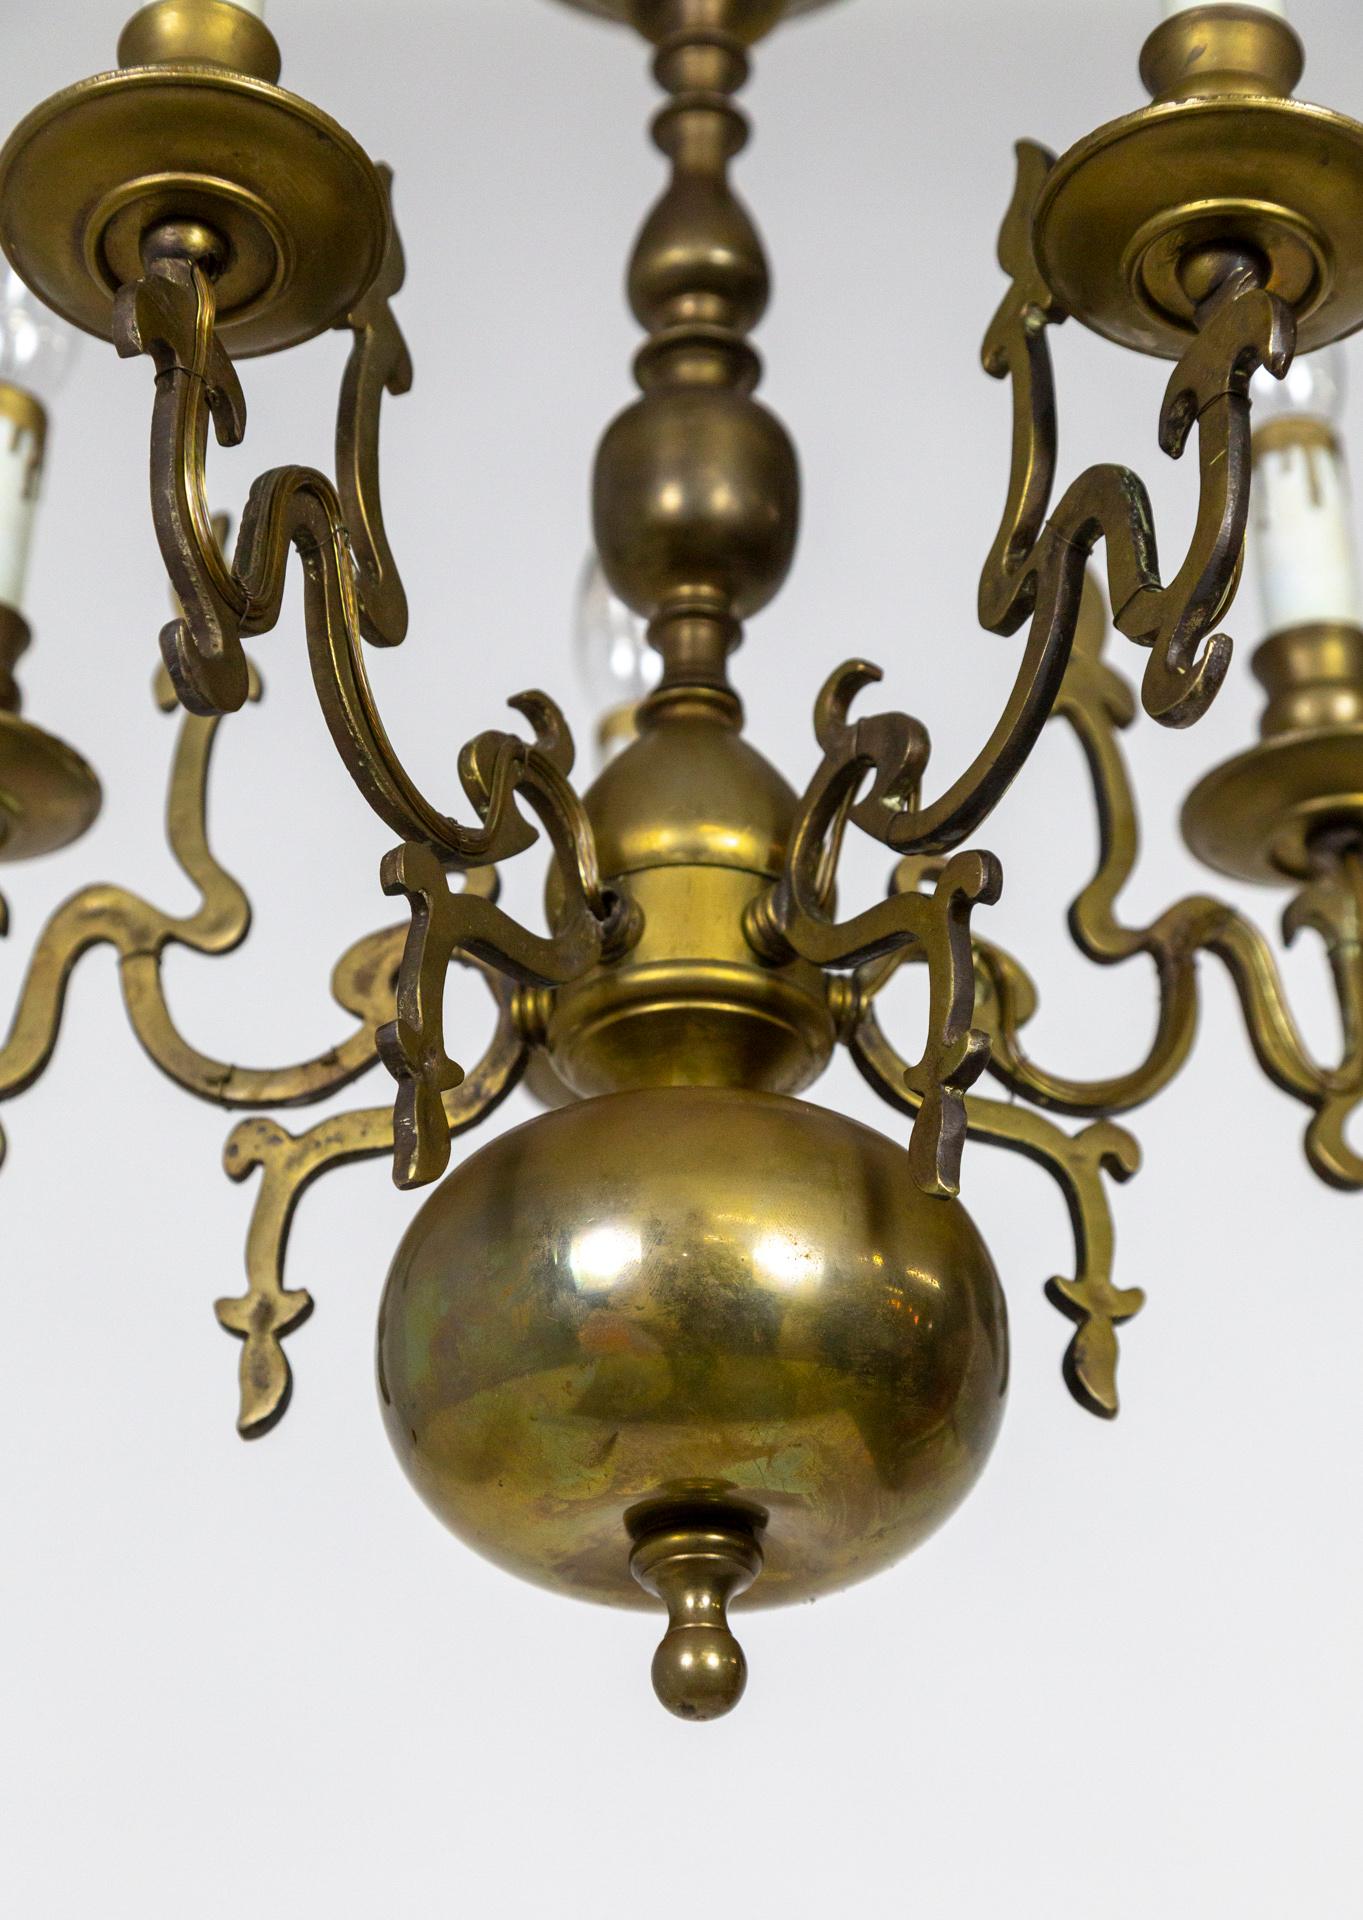 Dutch Colonial Dutch 19th Cent. 5-Light Brass Chandelier w/ Flame Detailing For Sale